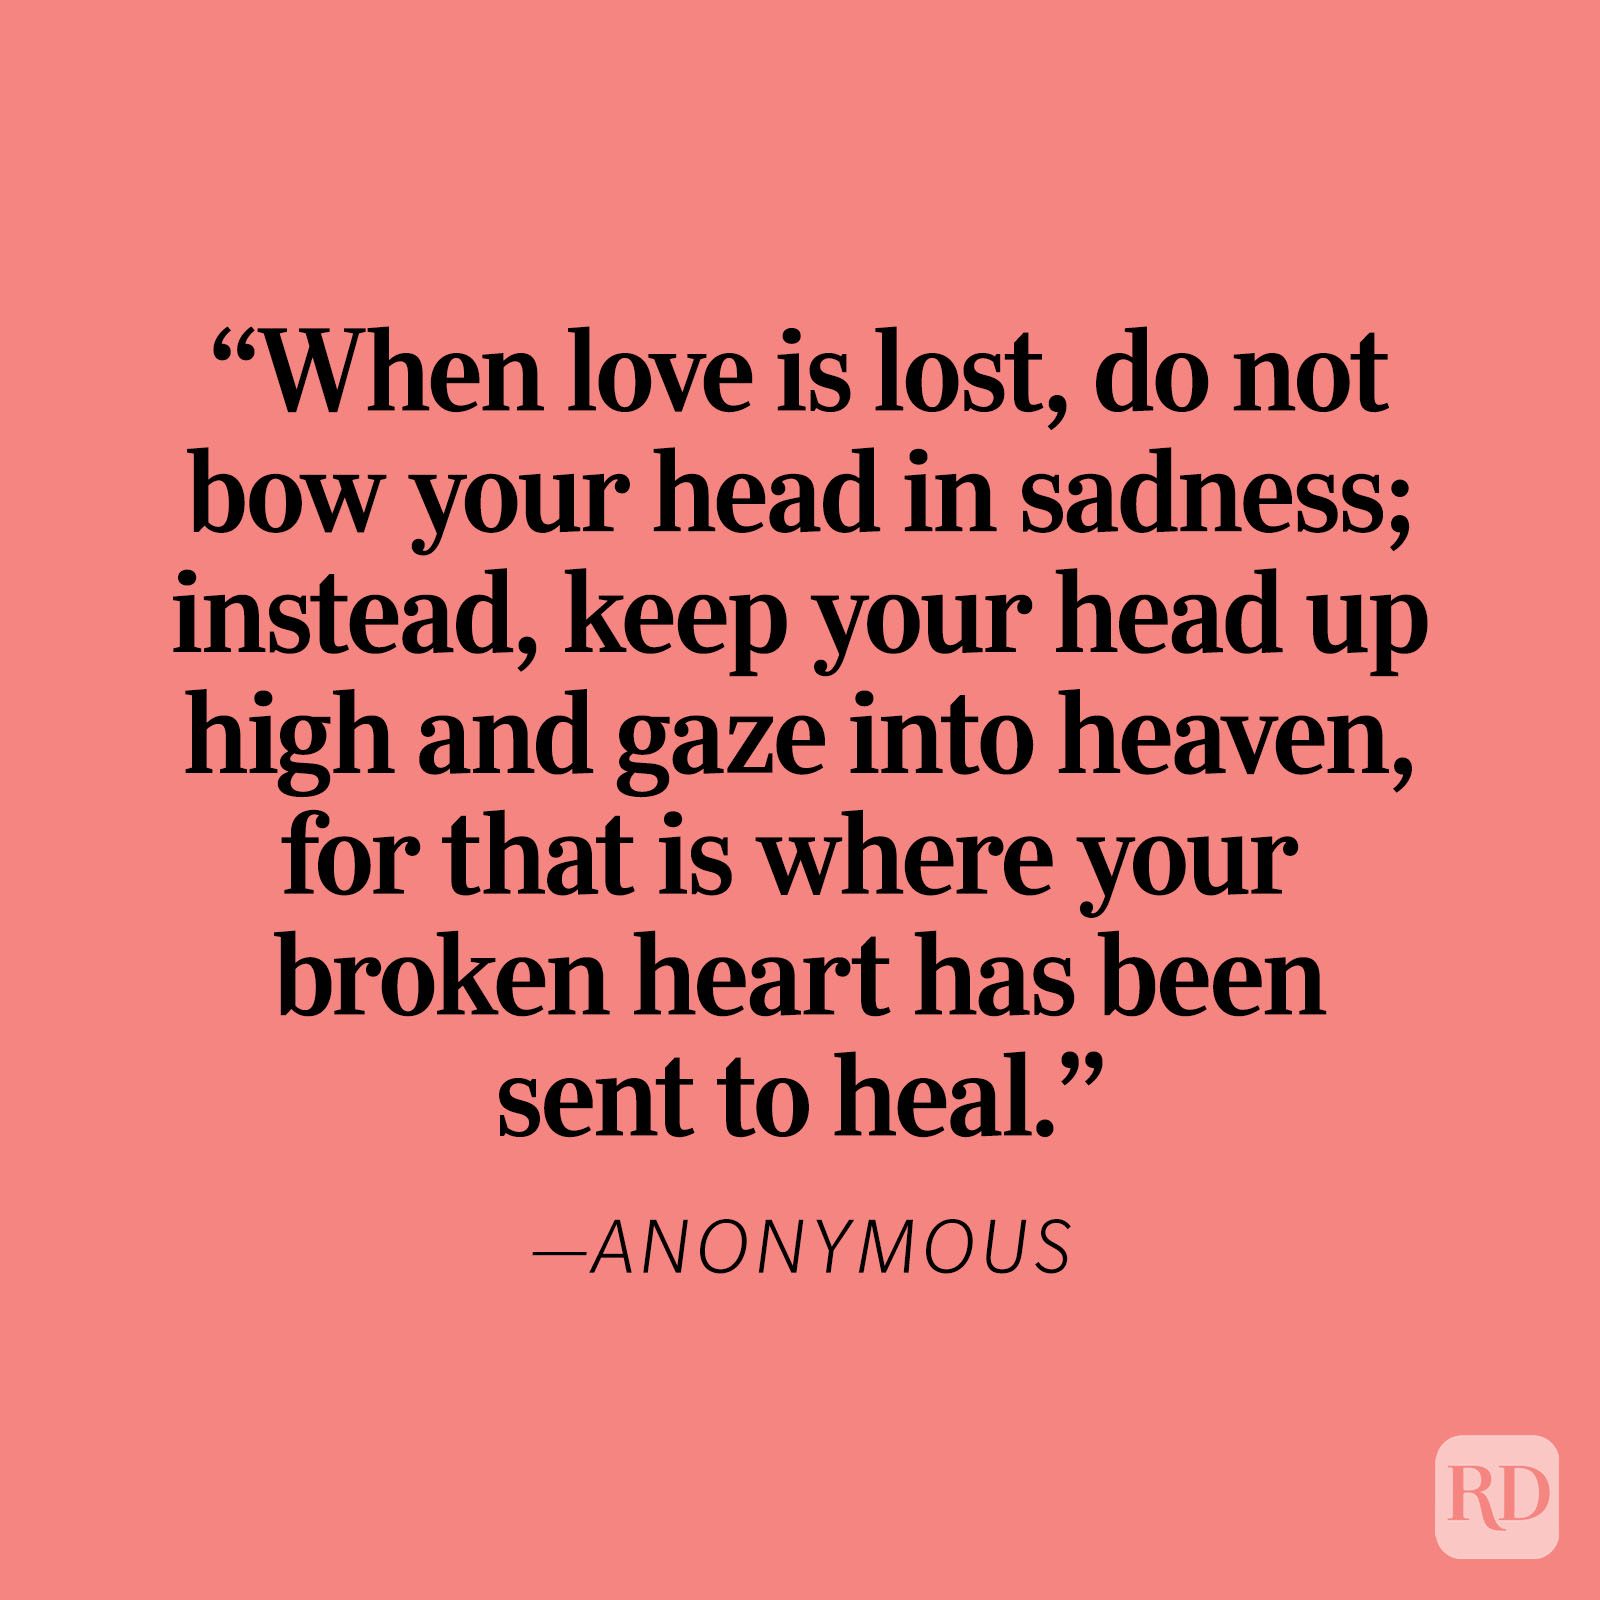 sad love quotes cover photos for facebook